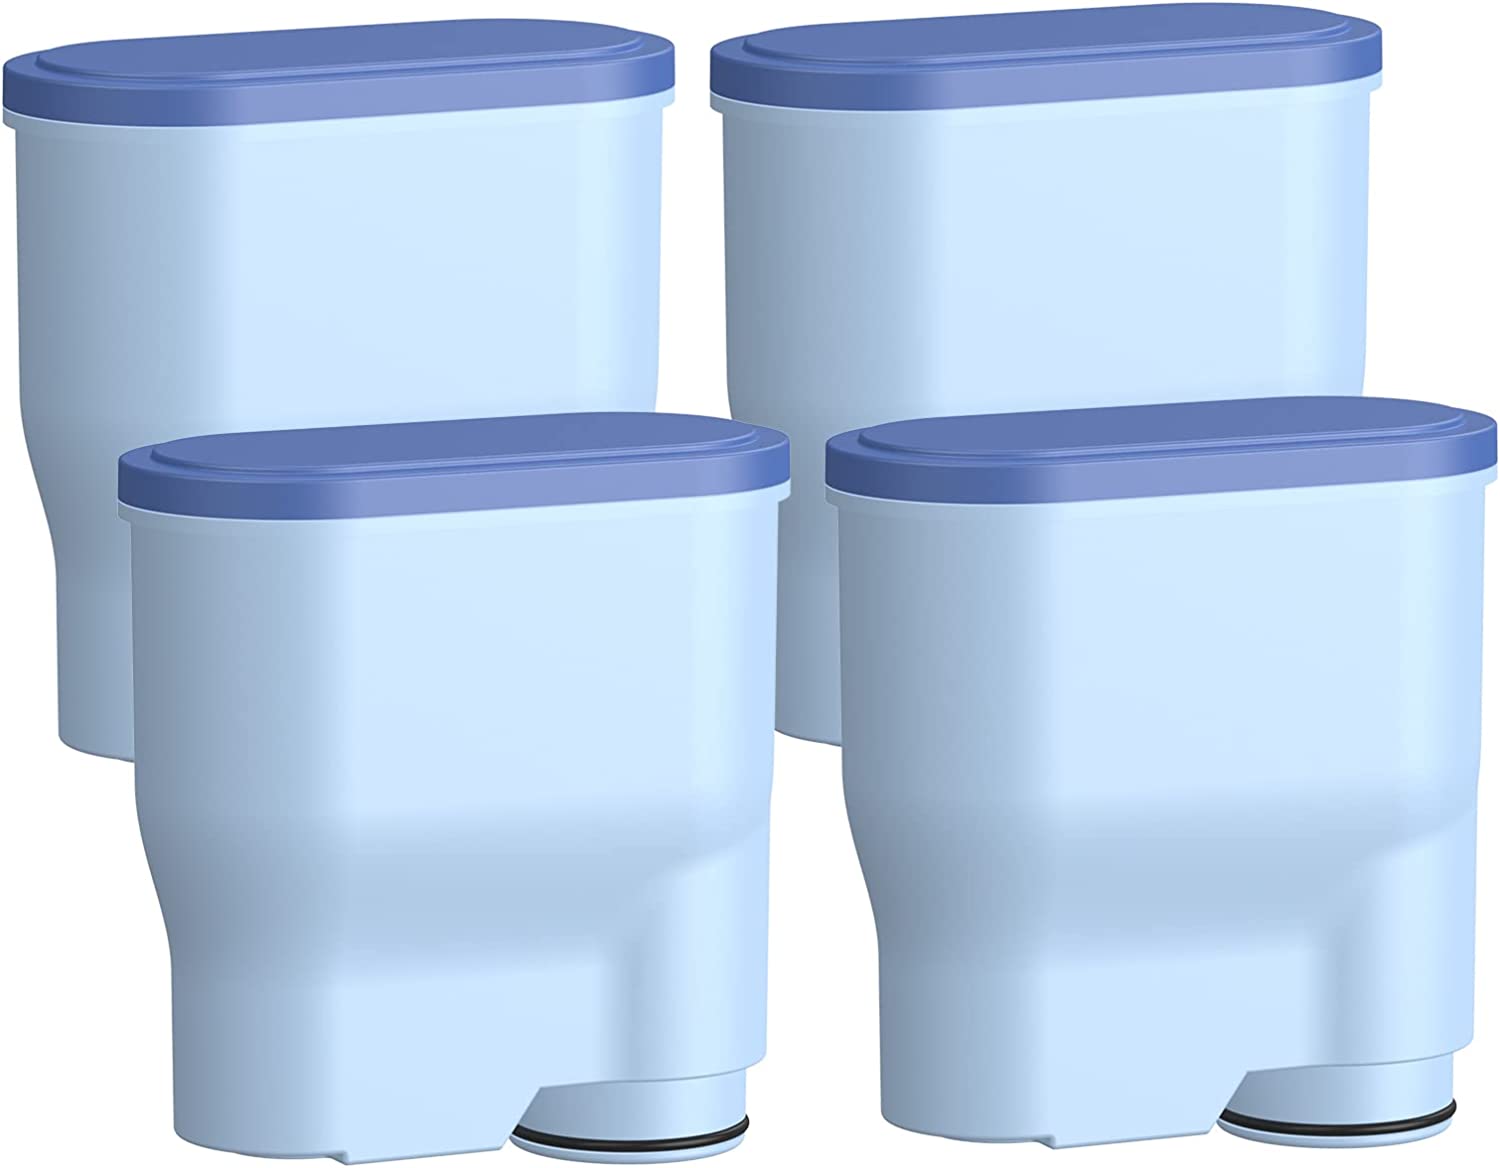 GLACIER FRESH AquaClean Water Filter Replacement for Philips Aqua Clean CA6903/22, CA6903/10, CA6903/00, Blue, Pack of 4